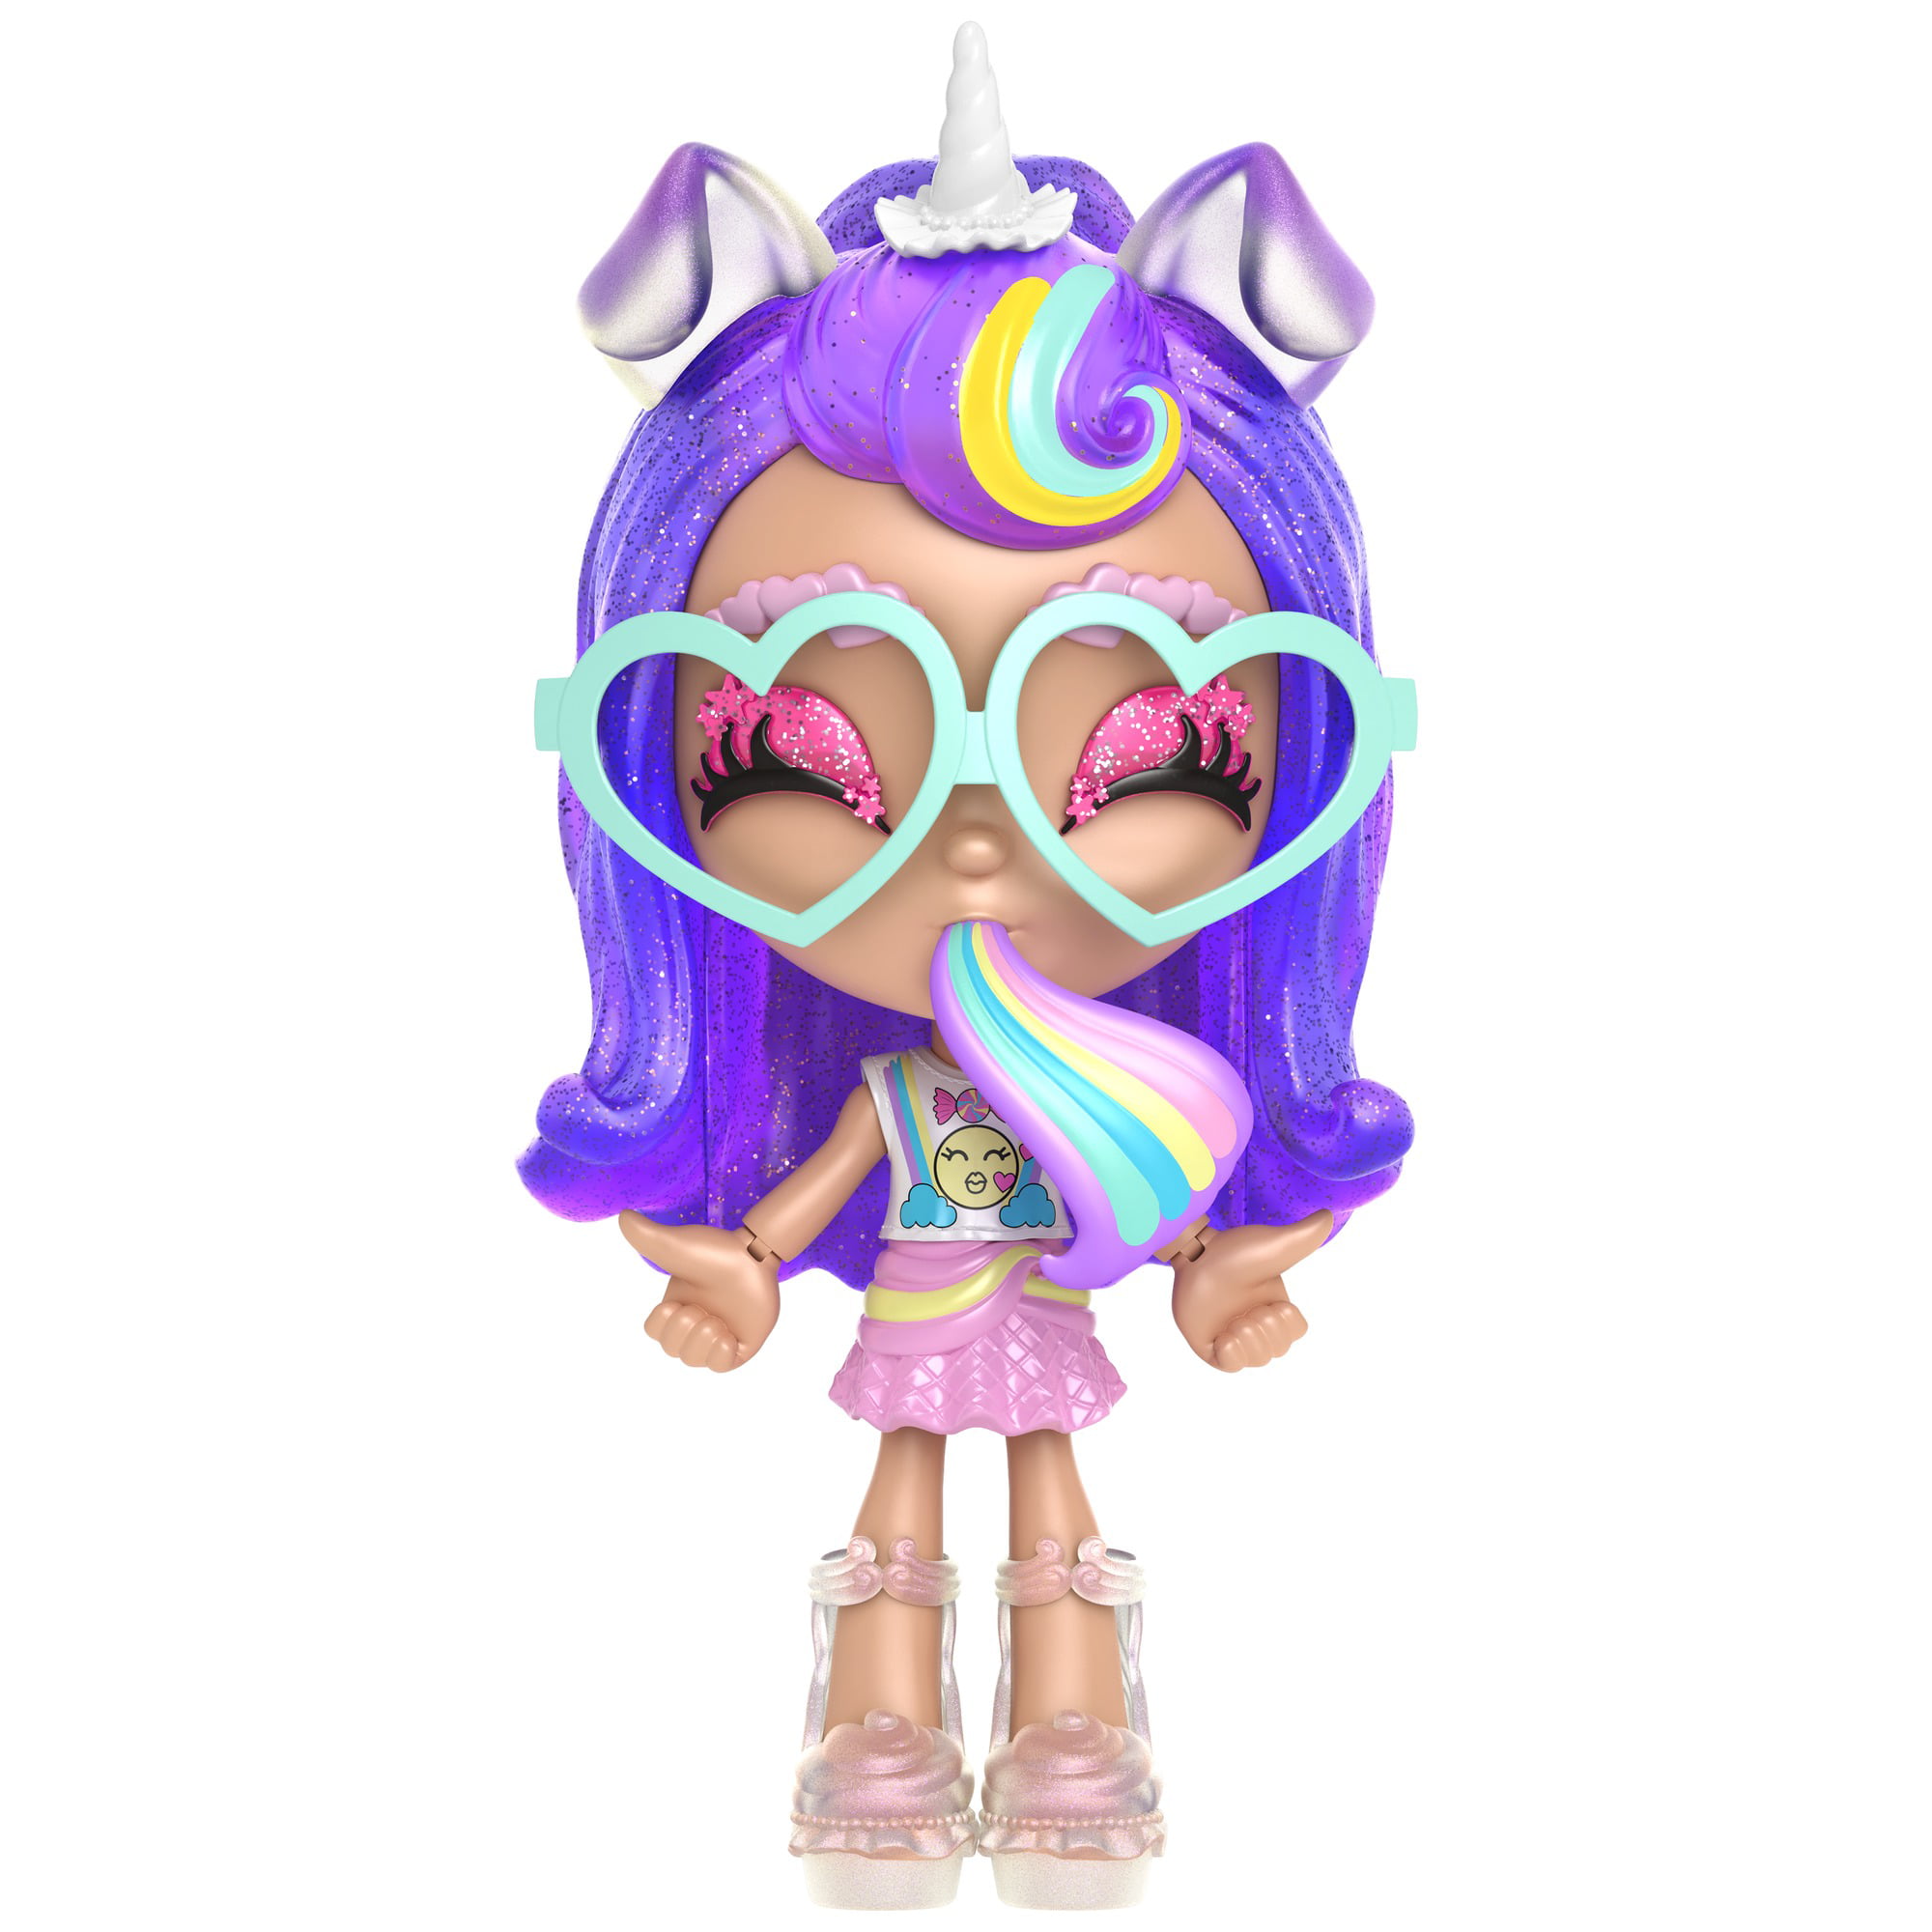 Lotta Looks Cookie Swirl Rainbow Sugar Rush Gift Set Doll with 20 Pieces